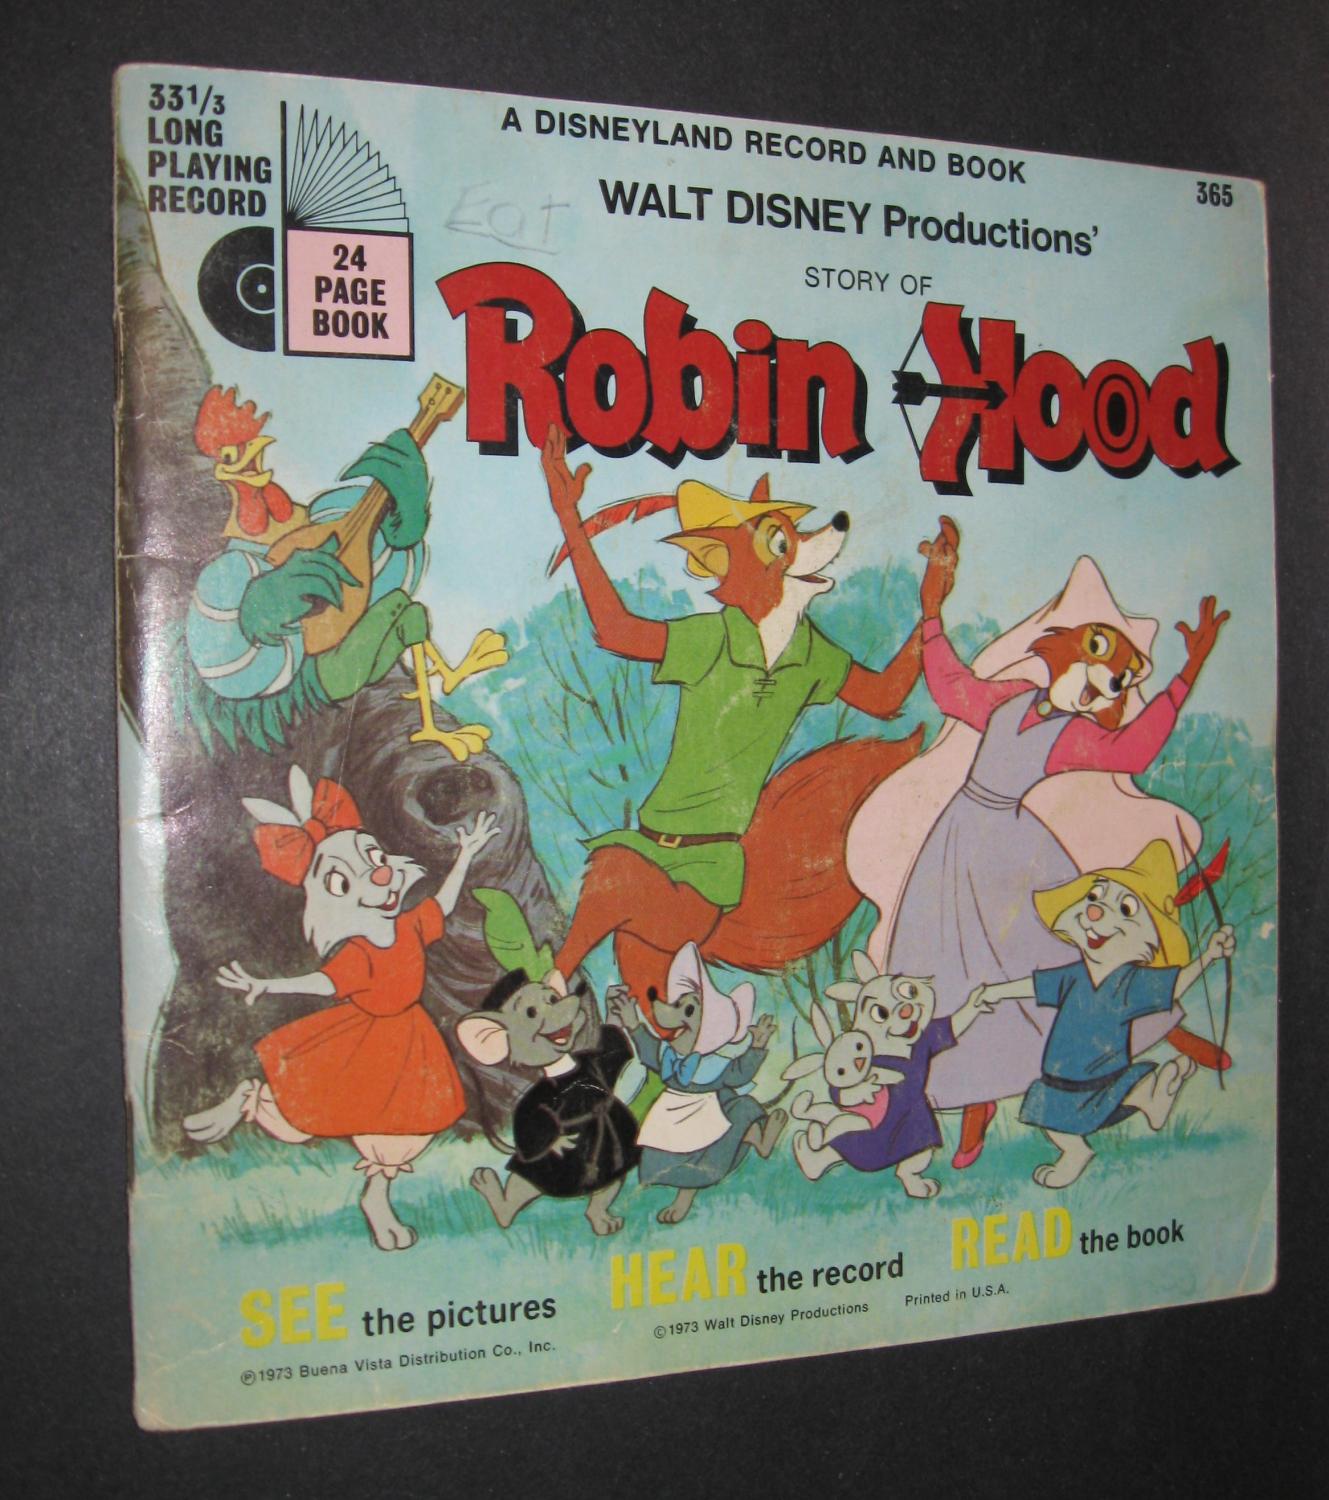 Walt Disney Productions' Story of Robin Hood